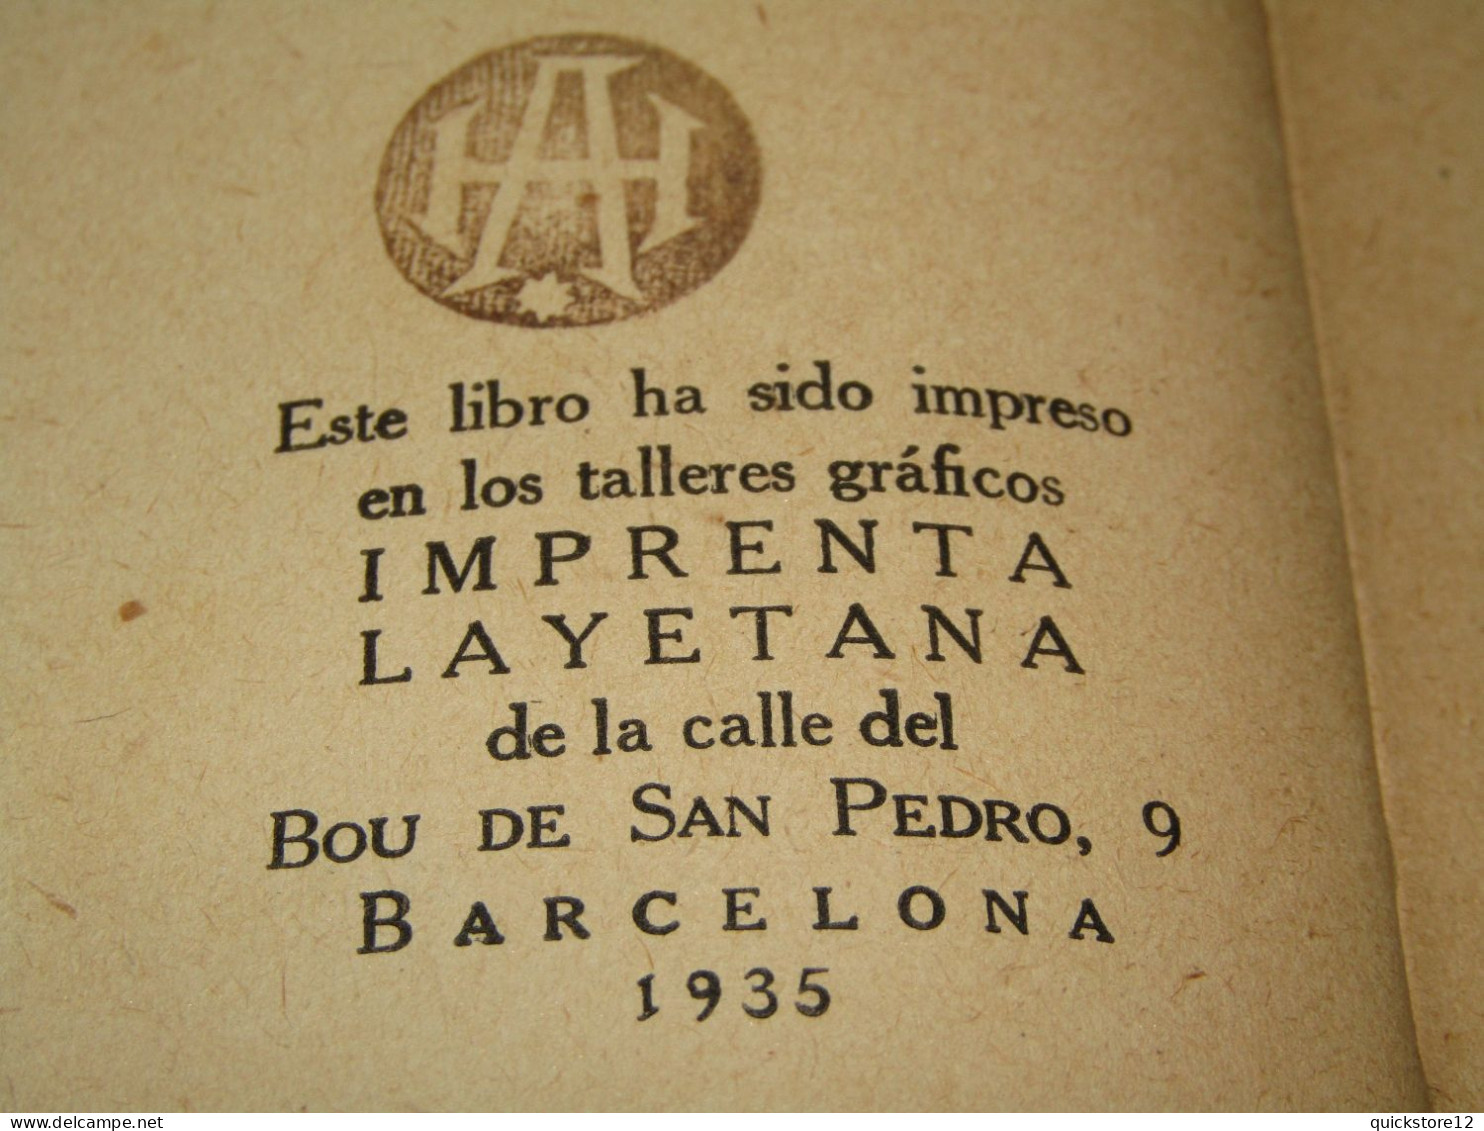 MI LUCHA - Primera edición en español. Imprenta Layetana - Barcelona 1935